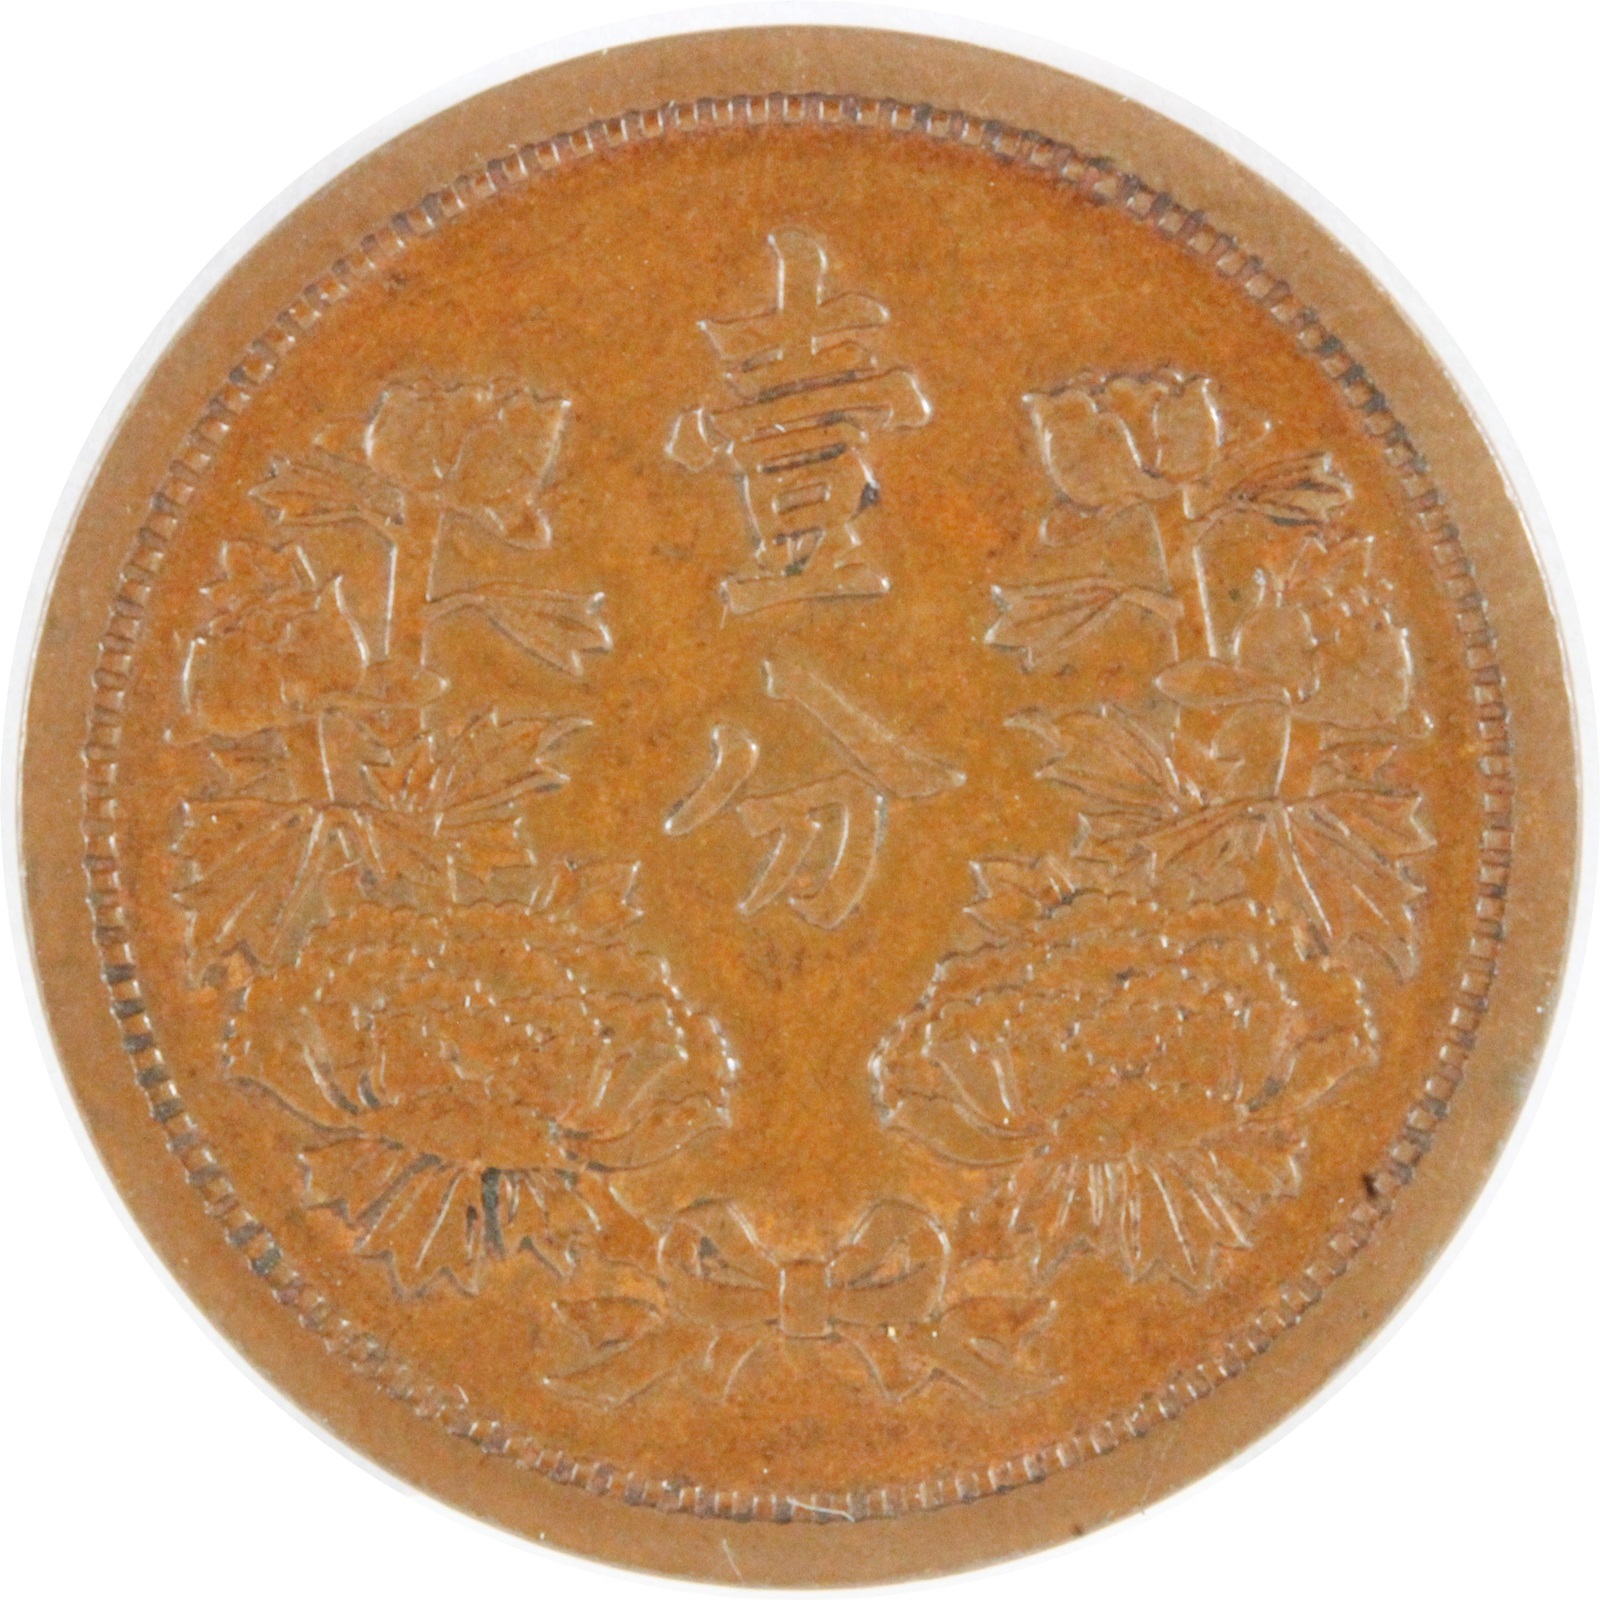 PCGS MS63BN 満州1分銅貨 康徳3年 - 旧貨幣/金貨/銀貨/記念硬貨